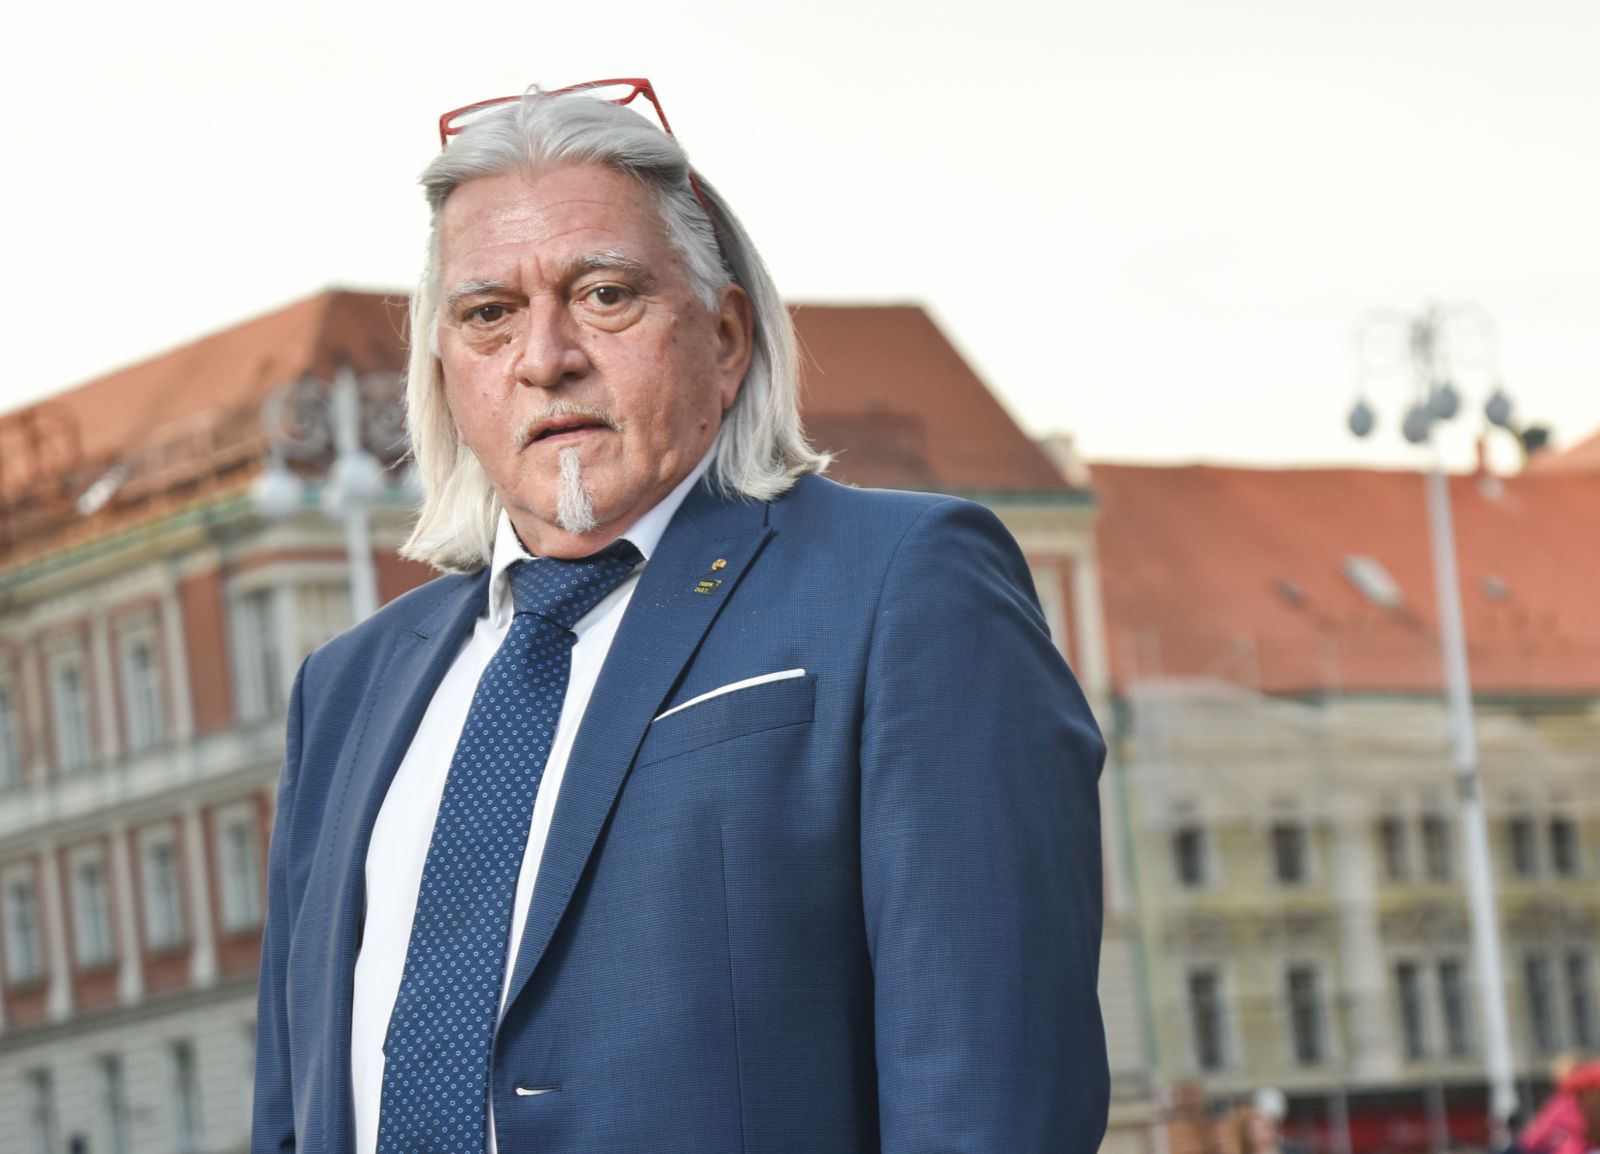 02.11.2022., Zagreb - Volker Dick, predsjednik ATEUCa, koordinacije kontrolora leta EU.

Photo Sasa ZinajaNFoto